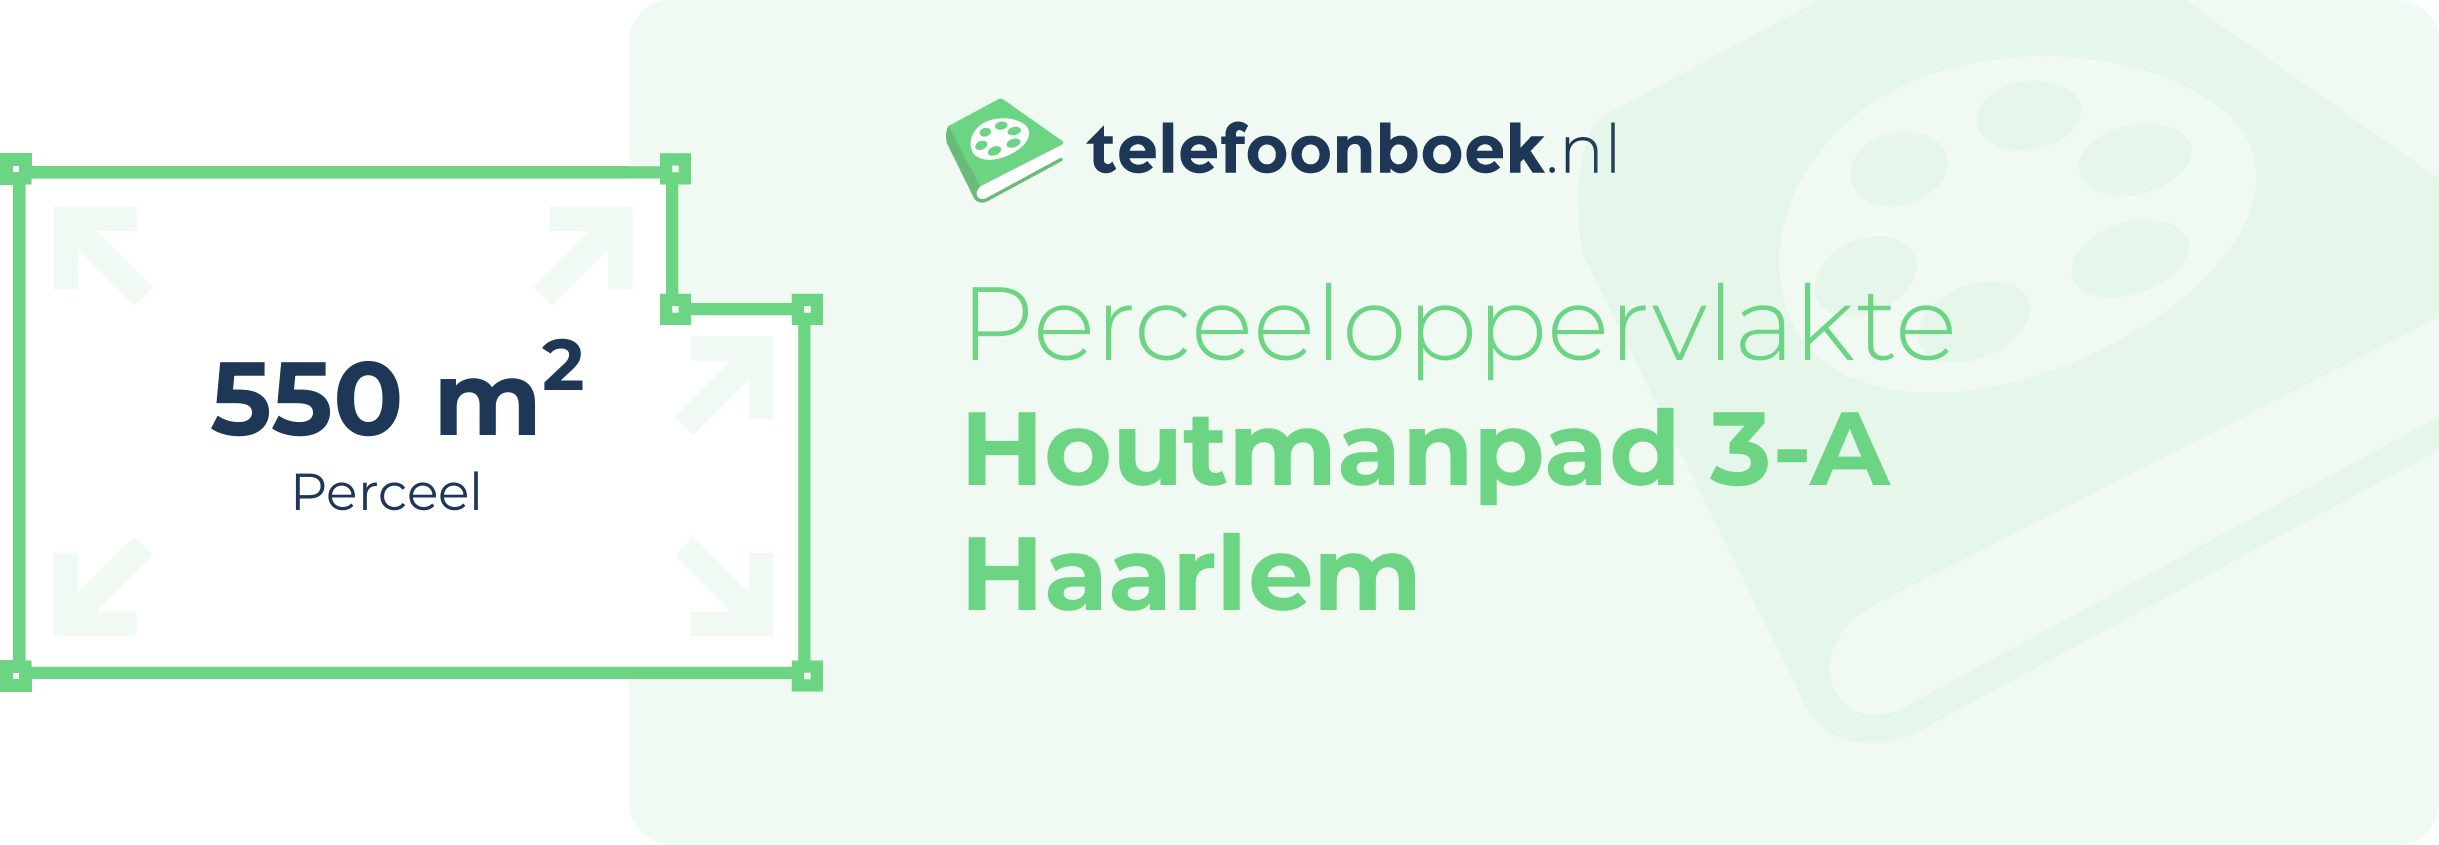 Perceeloppervlakte Houtmanpad 3-A Haarlem